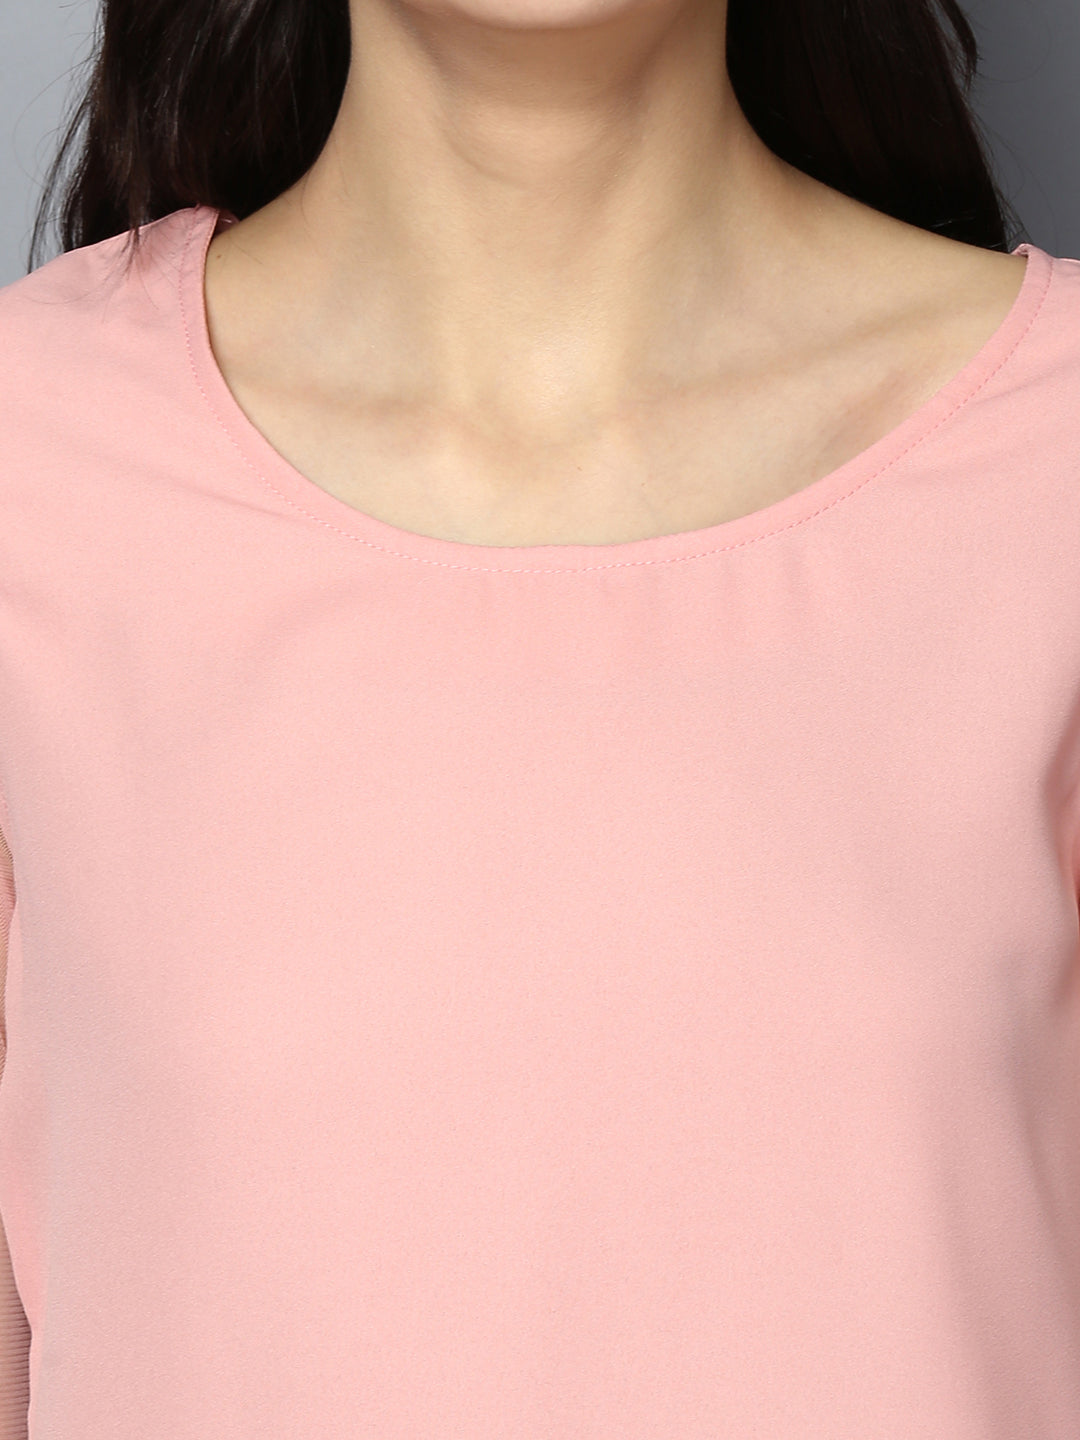 Women's Pink Net Multi Tier Sleeve Top